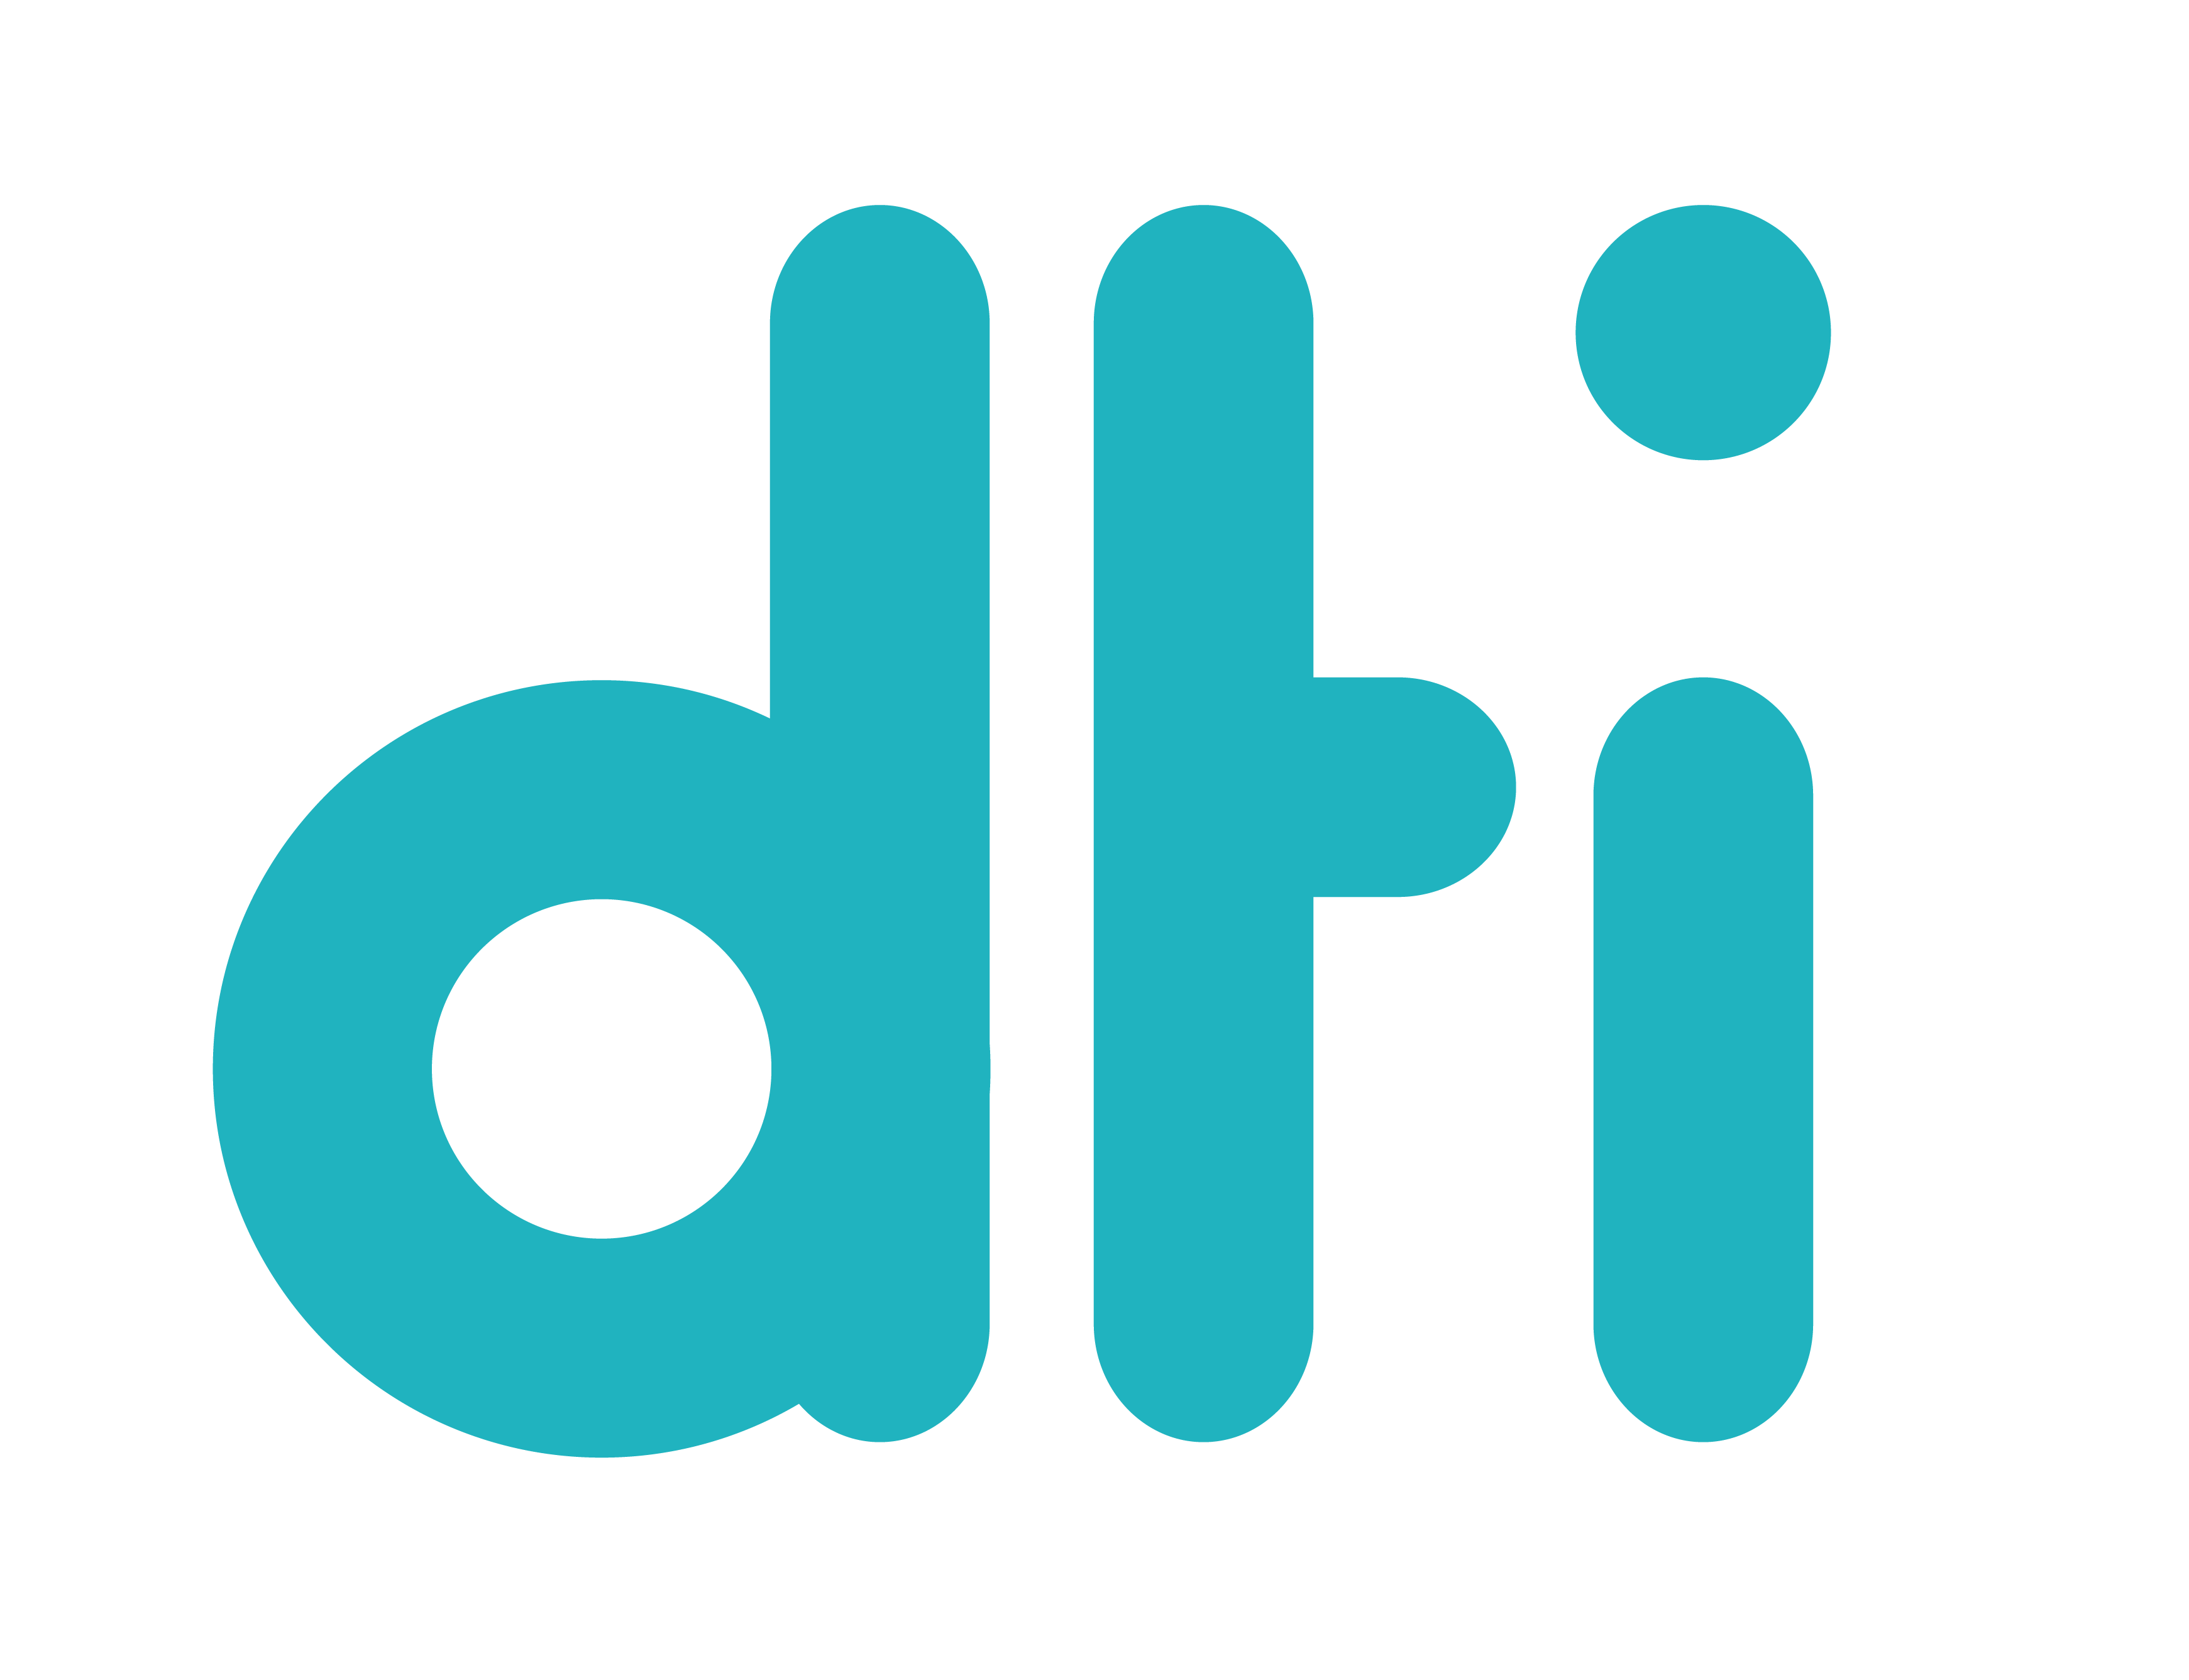 Logo DTI